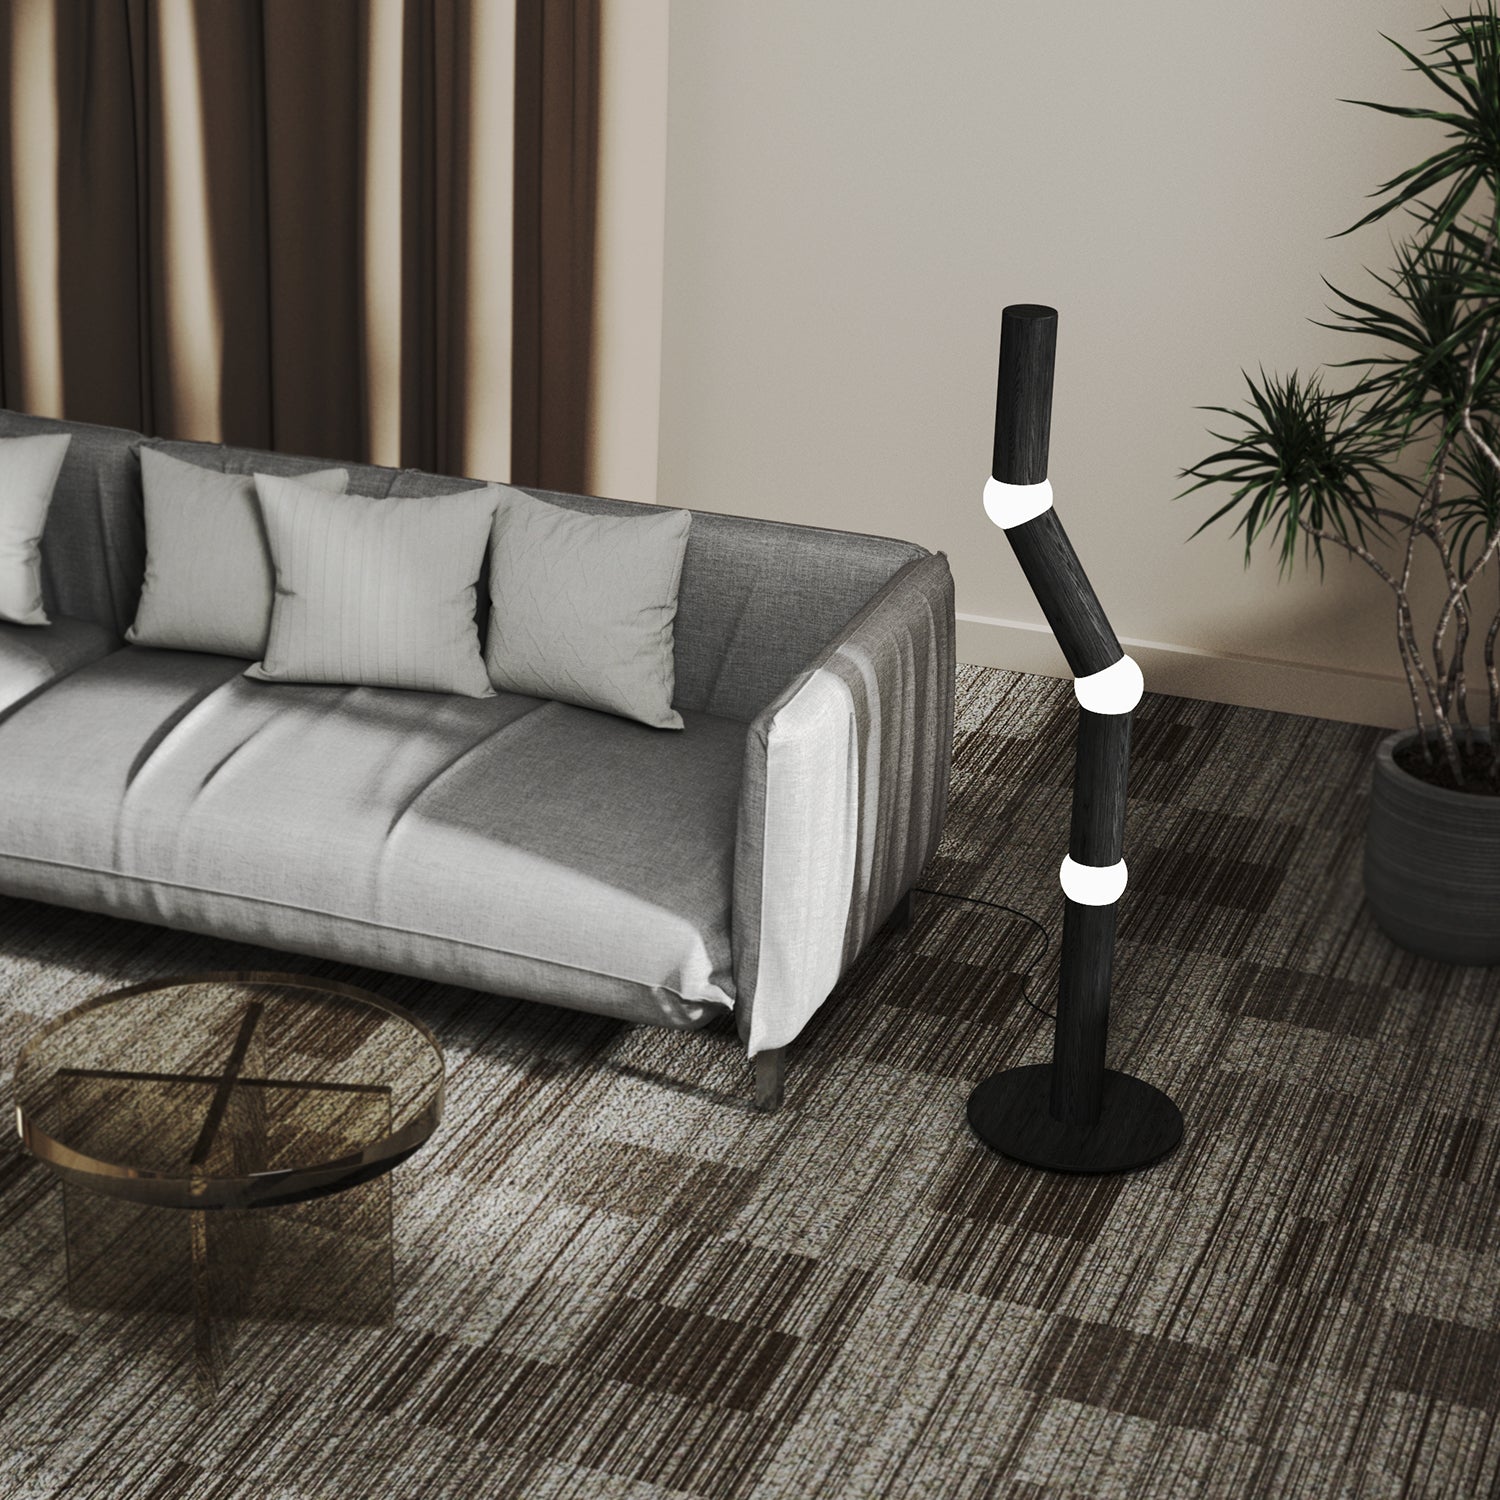 Lightbone Floor Lamp - The Design Choice